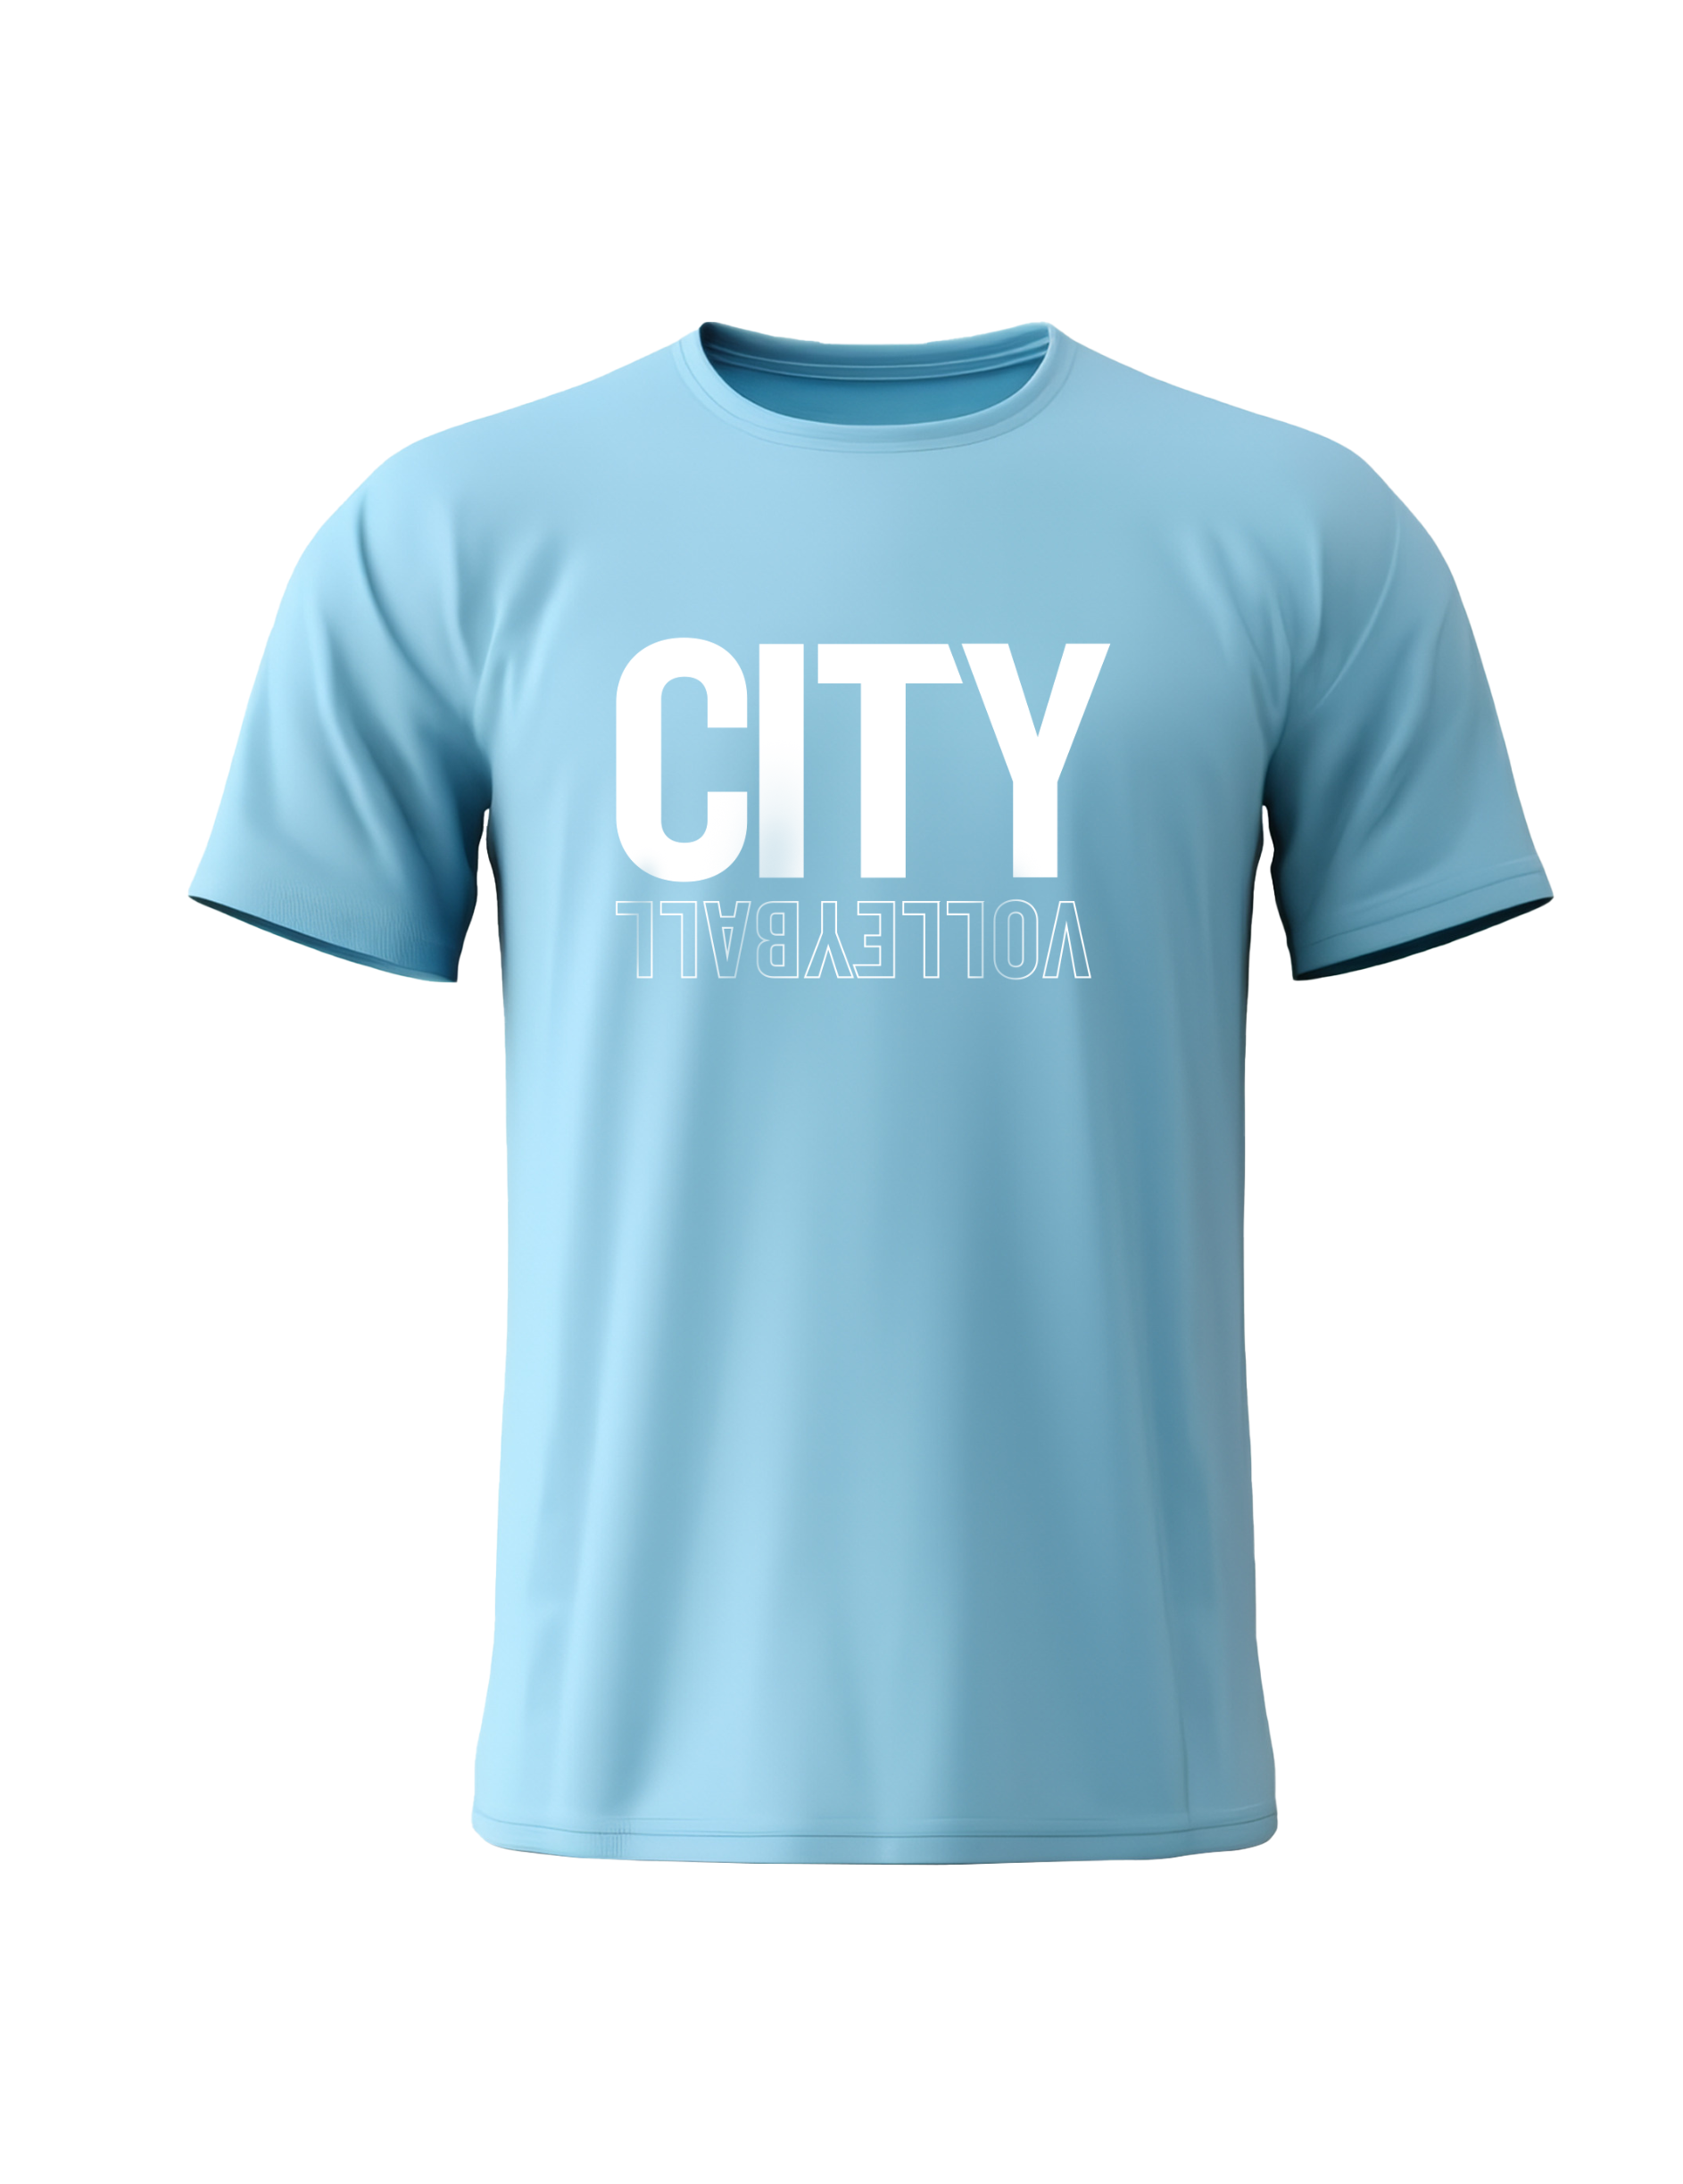 CITY Volleyball T Shirt